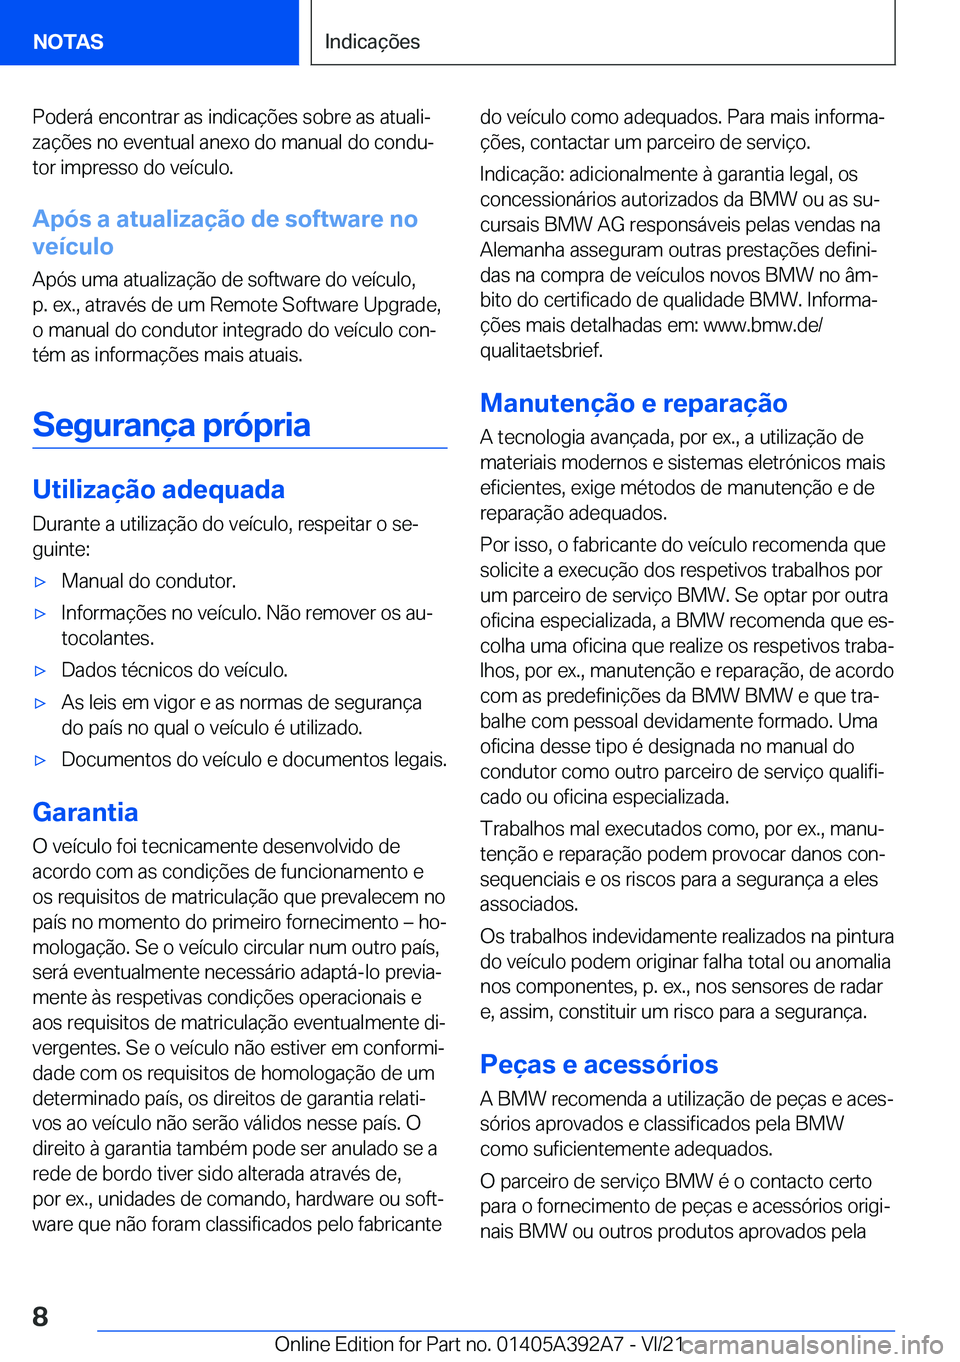 BMW 4 SERIES 2022  Manual do condutor (in Portuguese) �P�o�d�e�r�á��e�n�c�o�n�t�r�a�r��a�s��i�n�d�i�c�a�